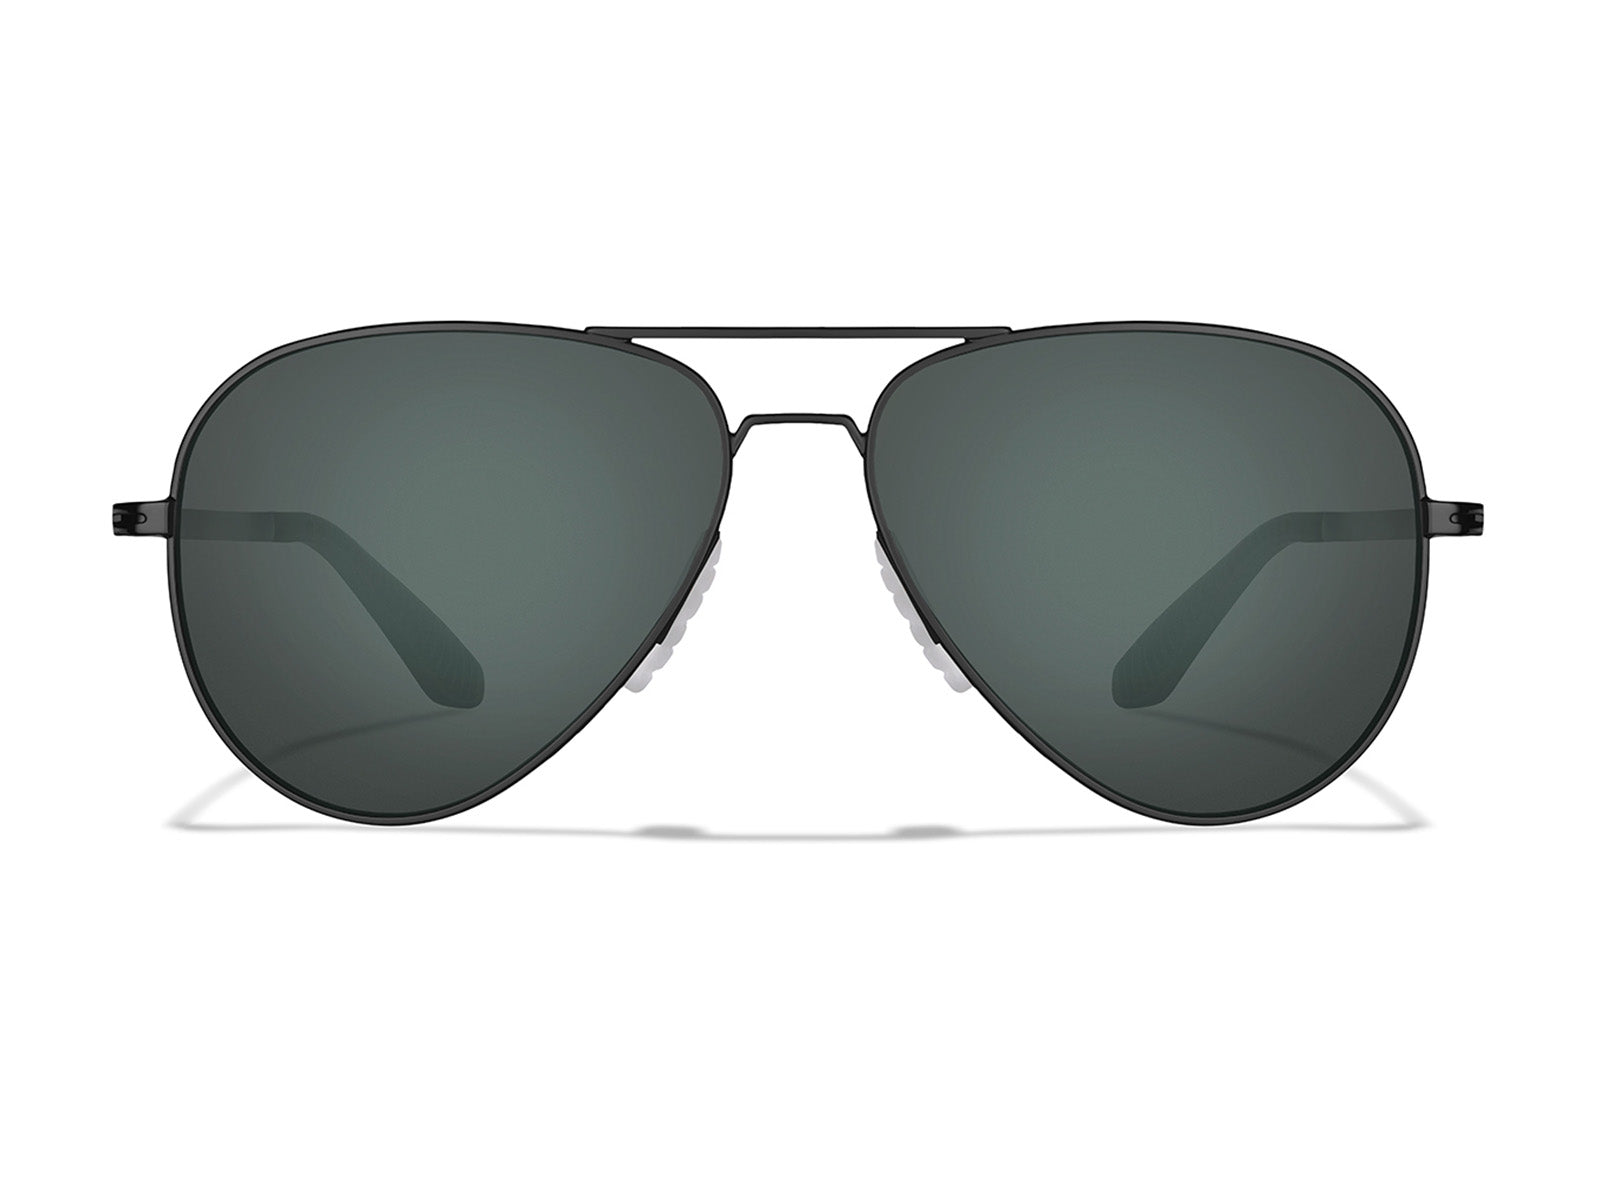 Roka Phantom Titanium Sunglasses with Silver Frames - Dark Arctic Mirror Lens | Regular